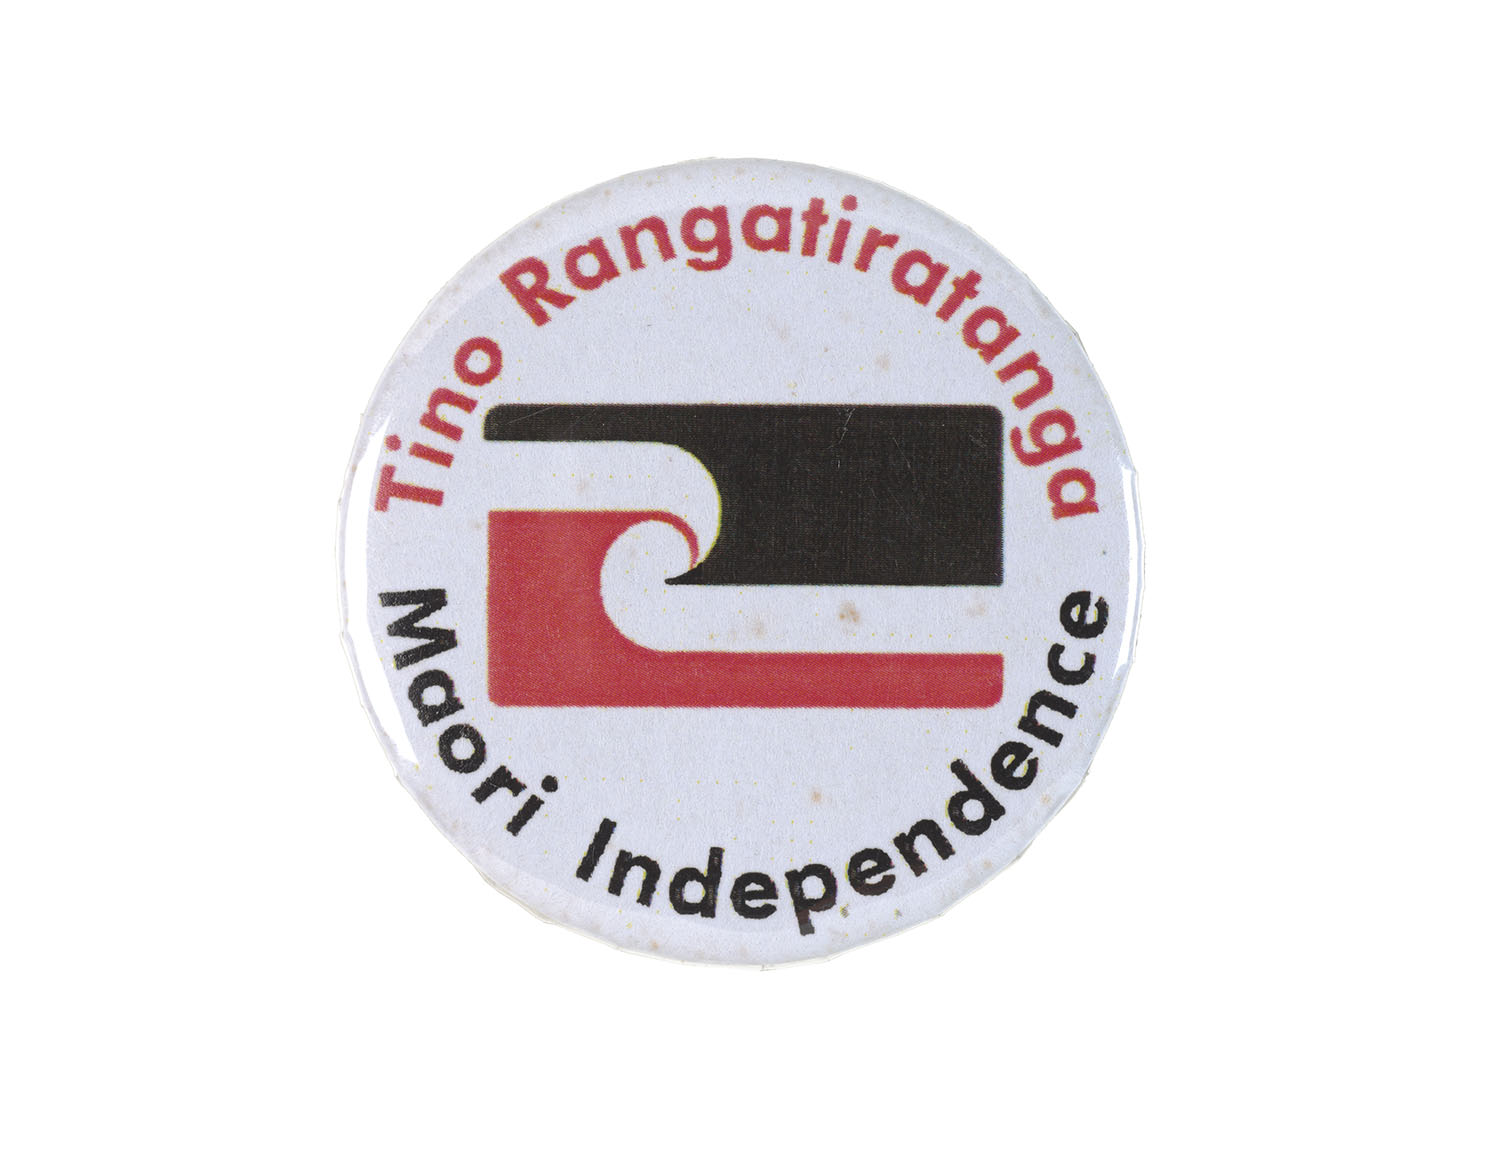 White badge with the tino rangatiratanga flag on it and the words “Tino Rangatiratanga Maori Independence”